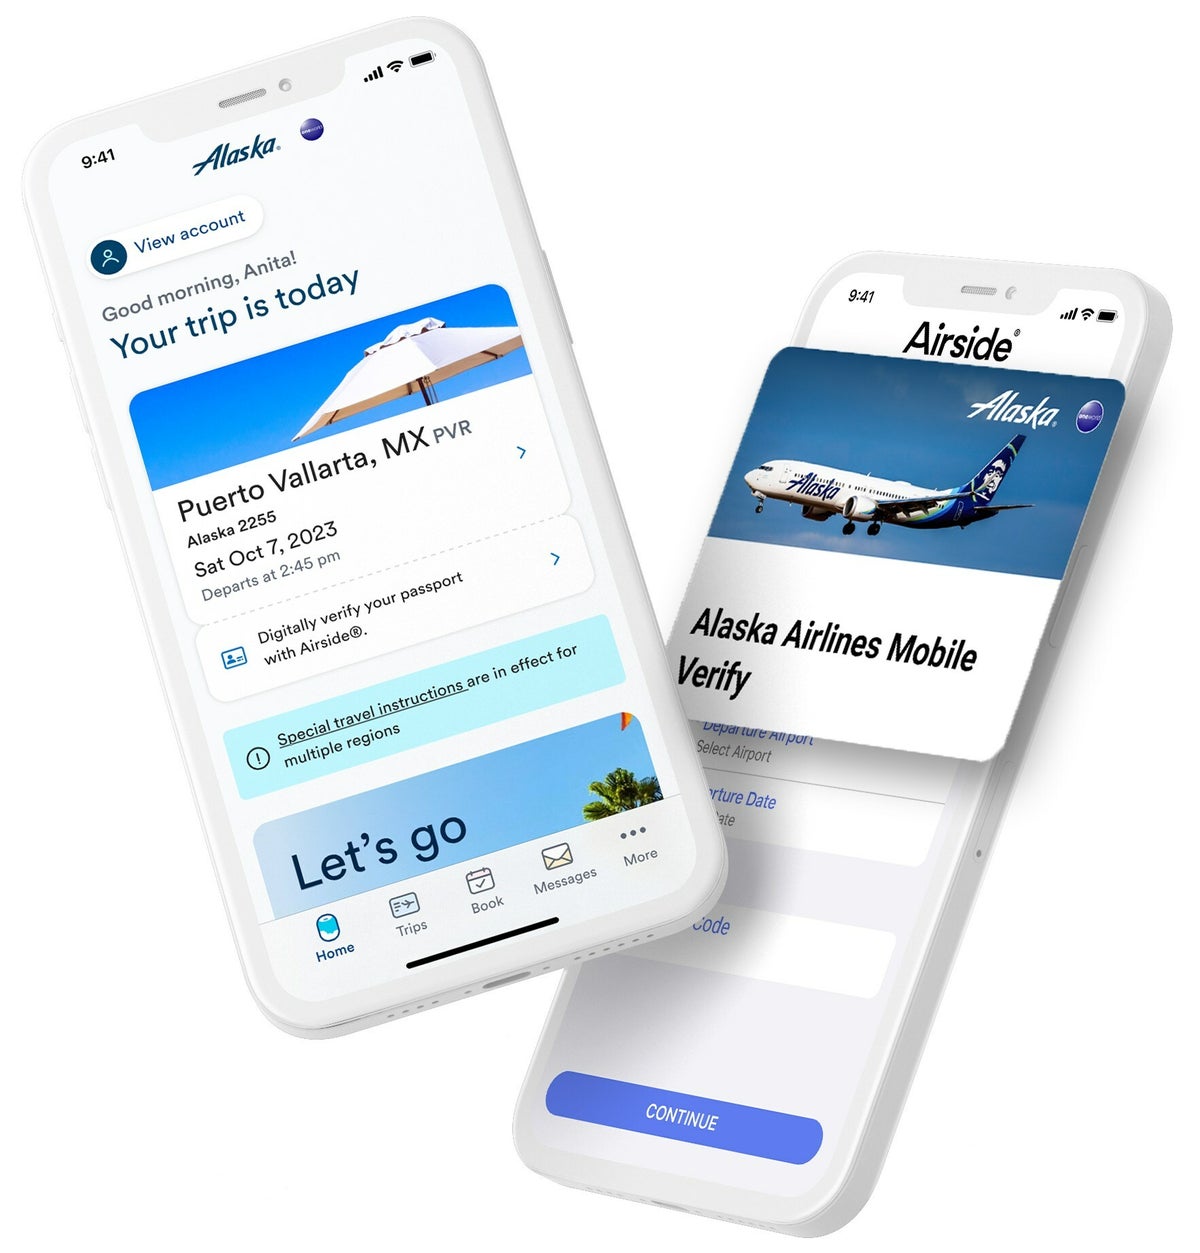 Alaska Airlines Mobile Verify